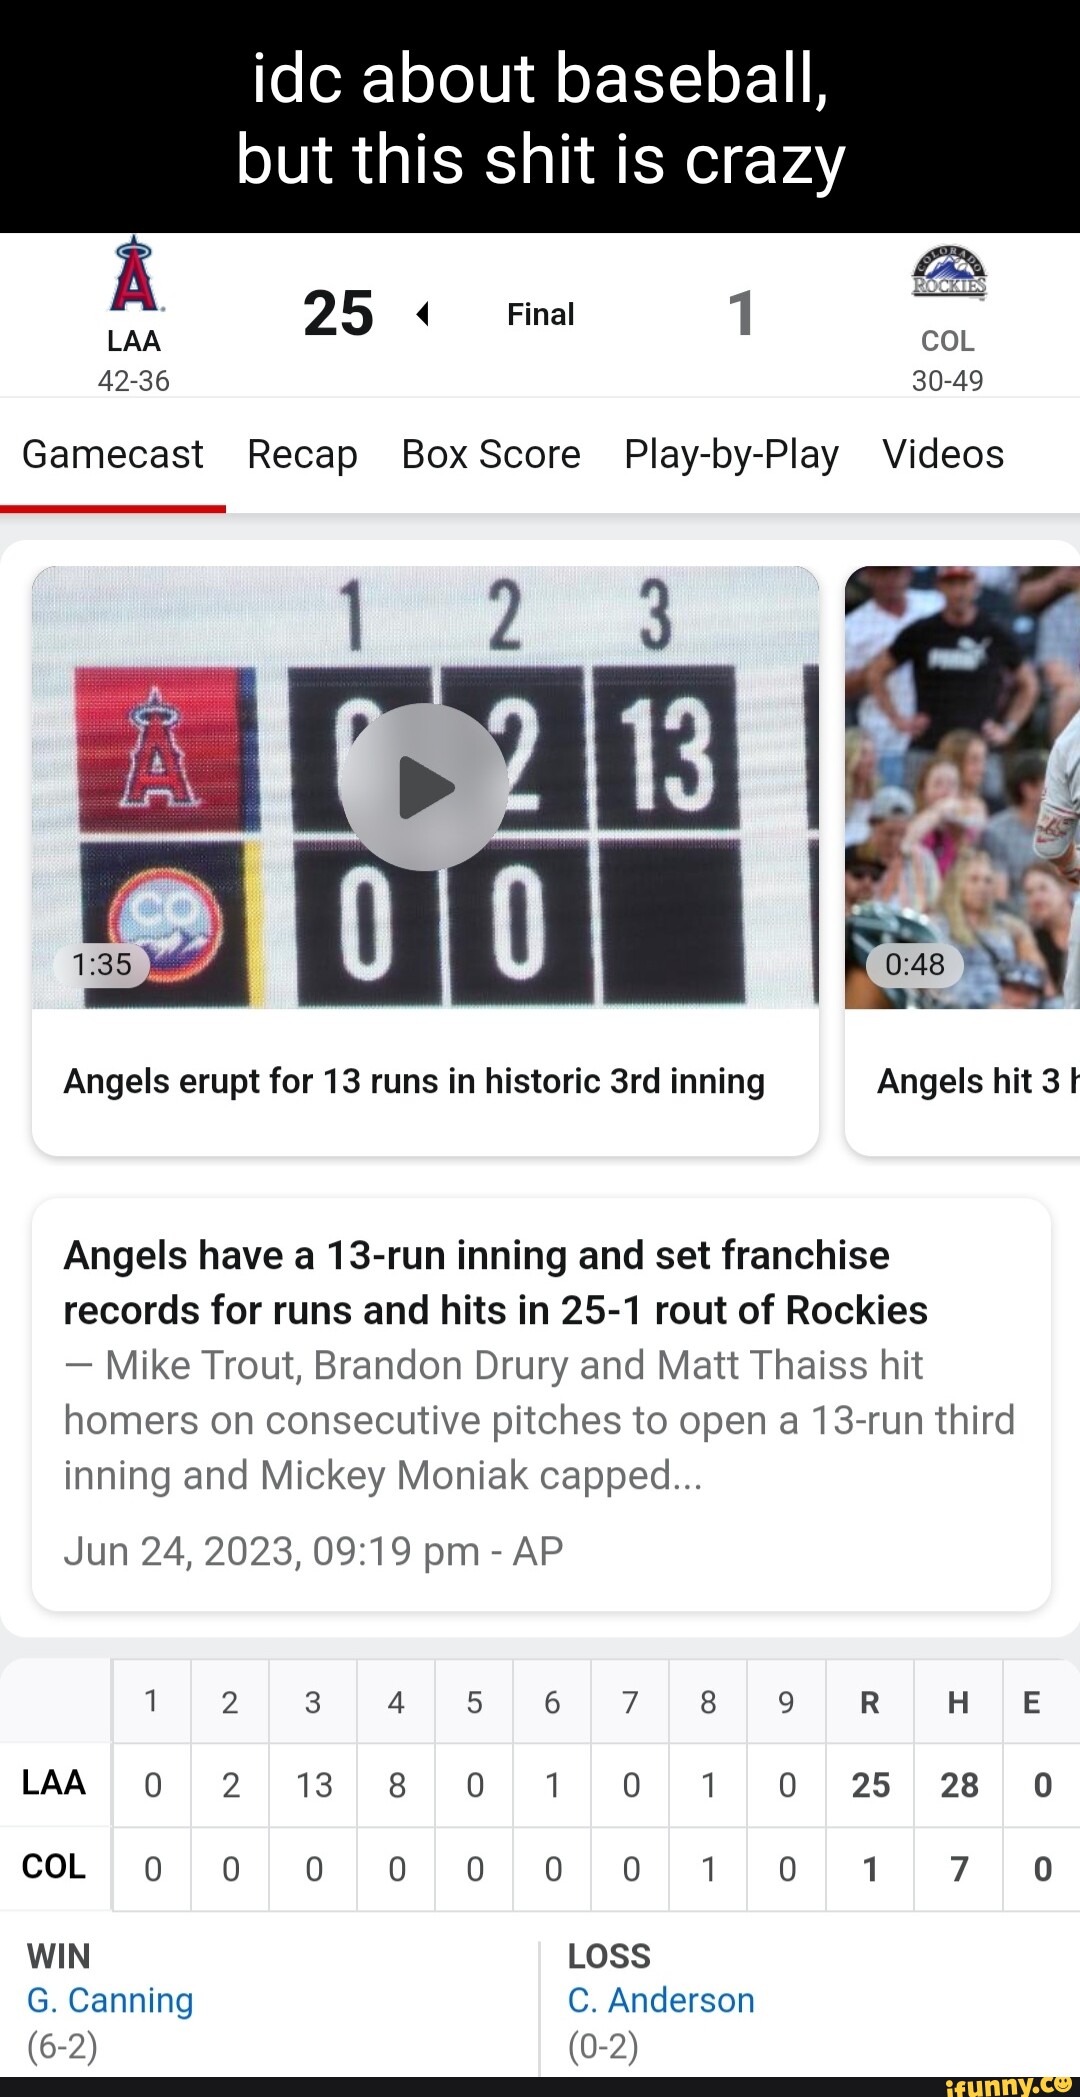 Angels destroy Rockies, set team records in 25-1 win